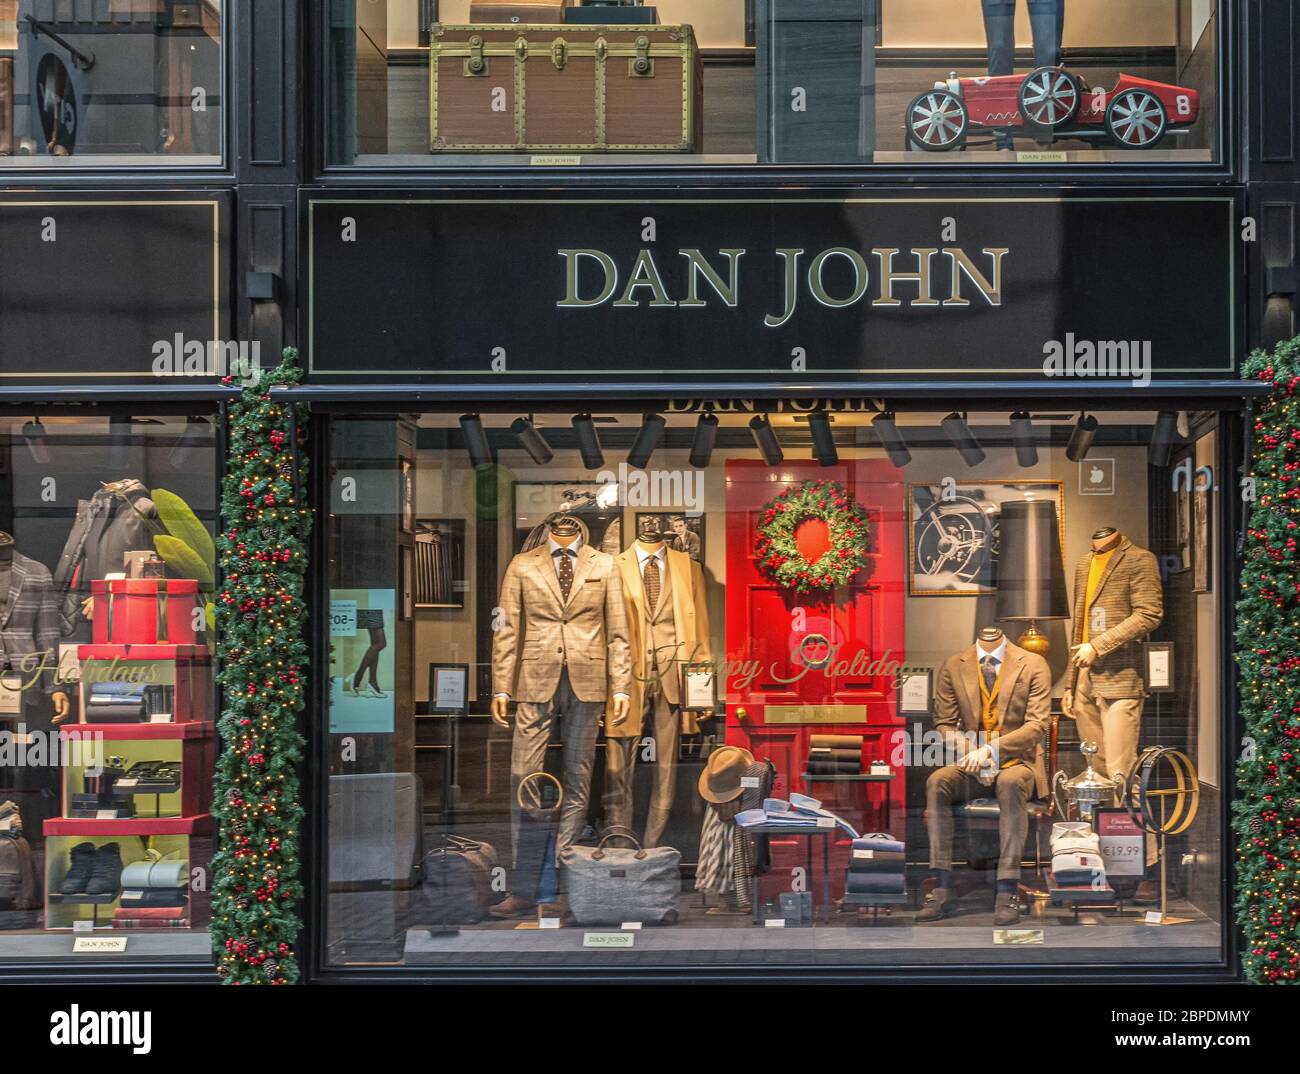 Dan John italienische Marke - Herrenbekleidung : Dan John italienische  Herrenmode Bekleidungsunternehmen Shop in Brüssel, Belgien, Europa  Stockfotografie - Alamy